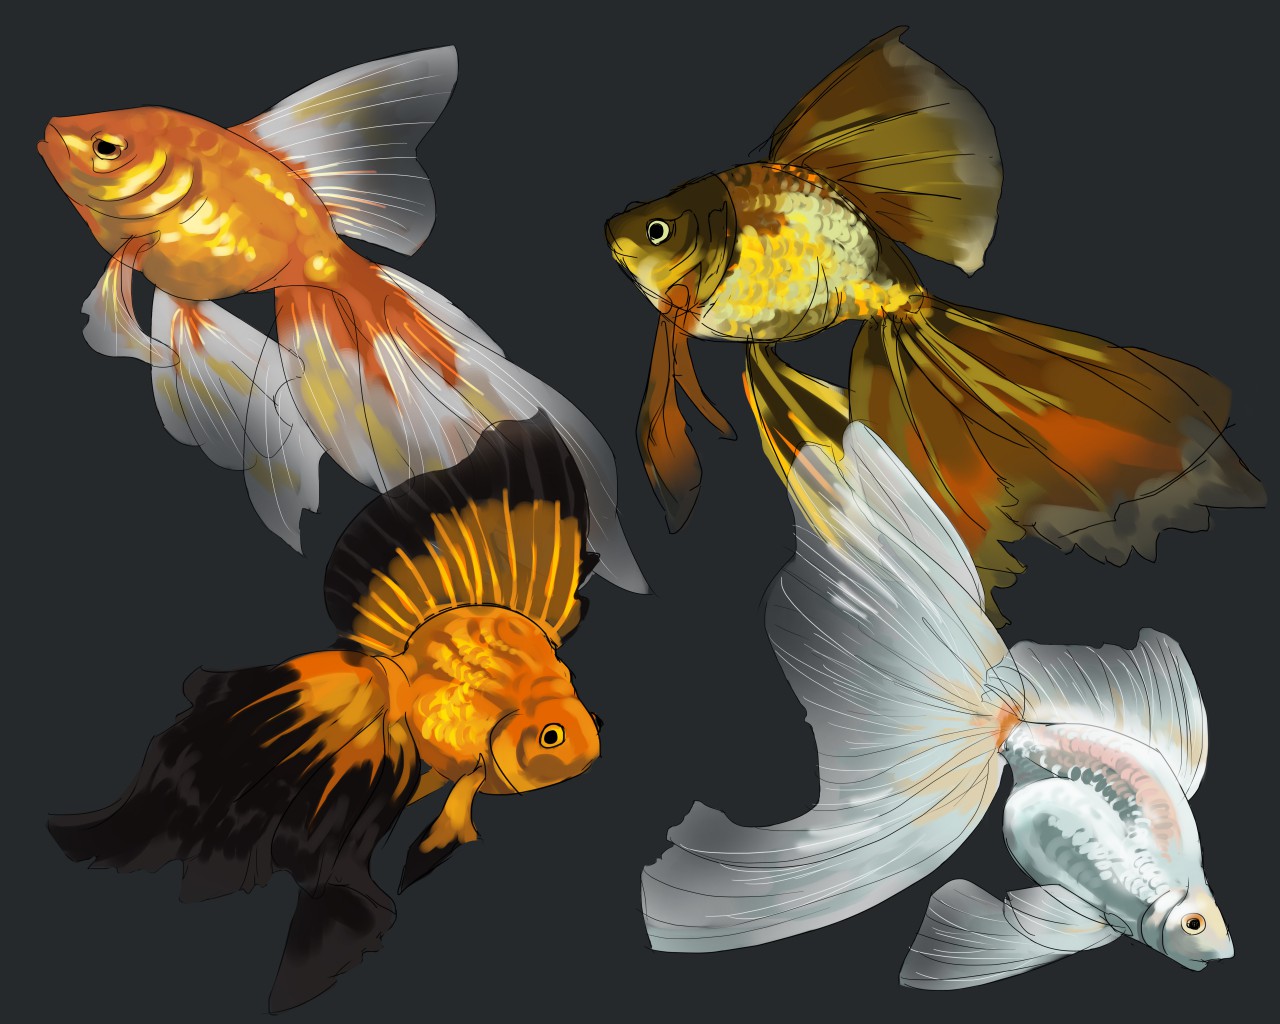 Veiltail Goldfish studies by Slivers -- Fur Affinity [dot] net